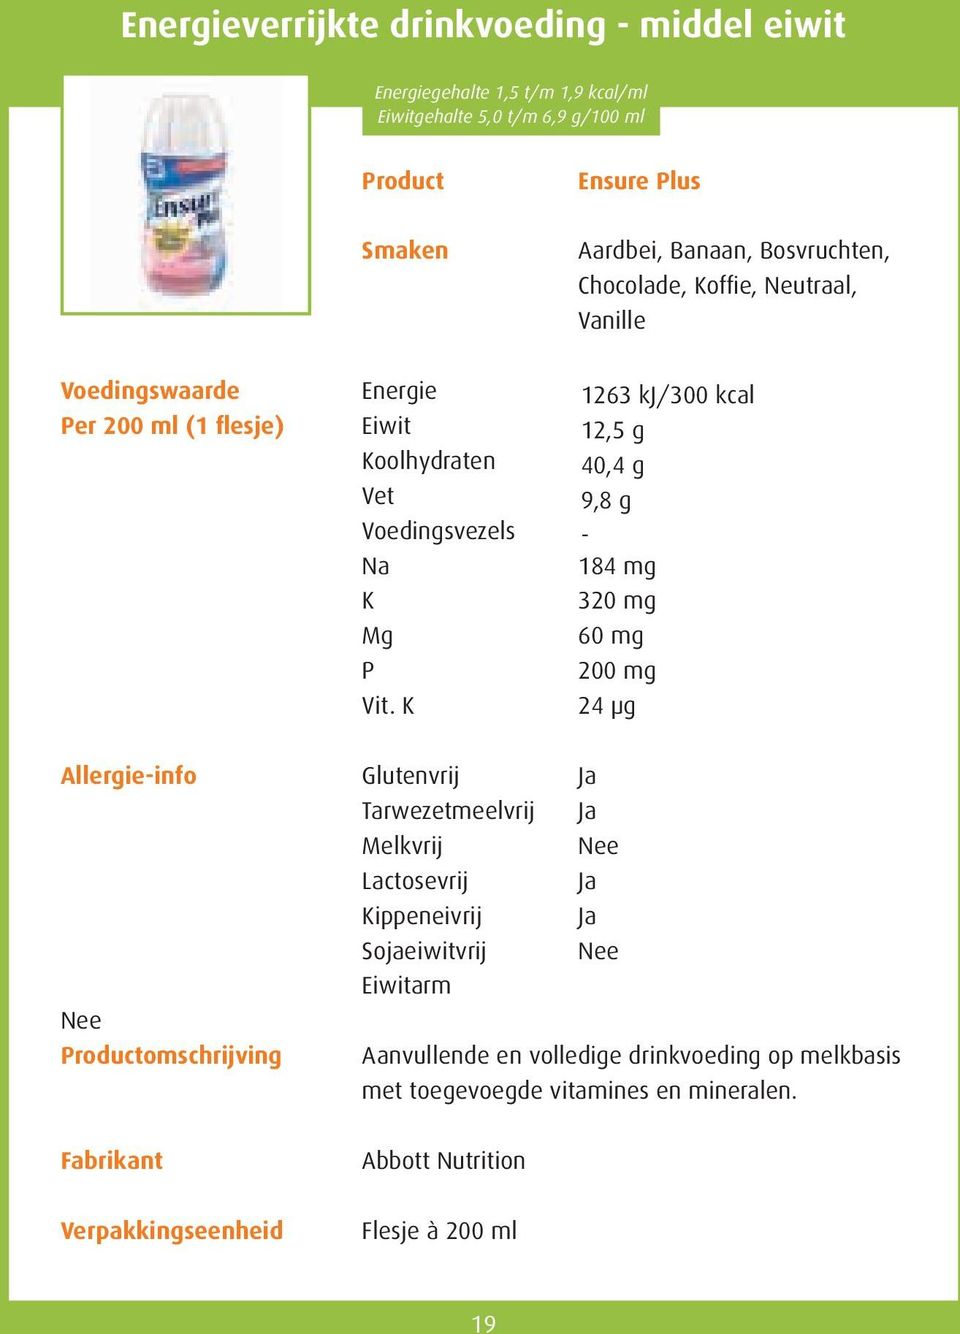 kcal Eiwit 12,5 g oolhydraten 40,4 g 9,8 g Voedingsvezels - 184 mg 320 mg 60 mg 200 mg Vit.